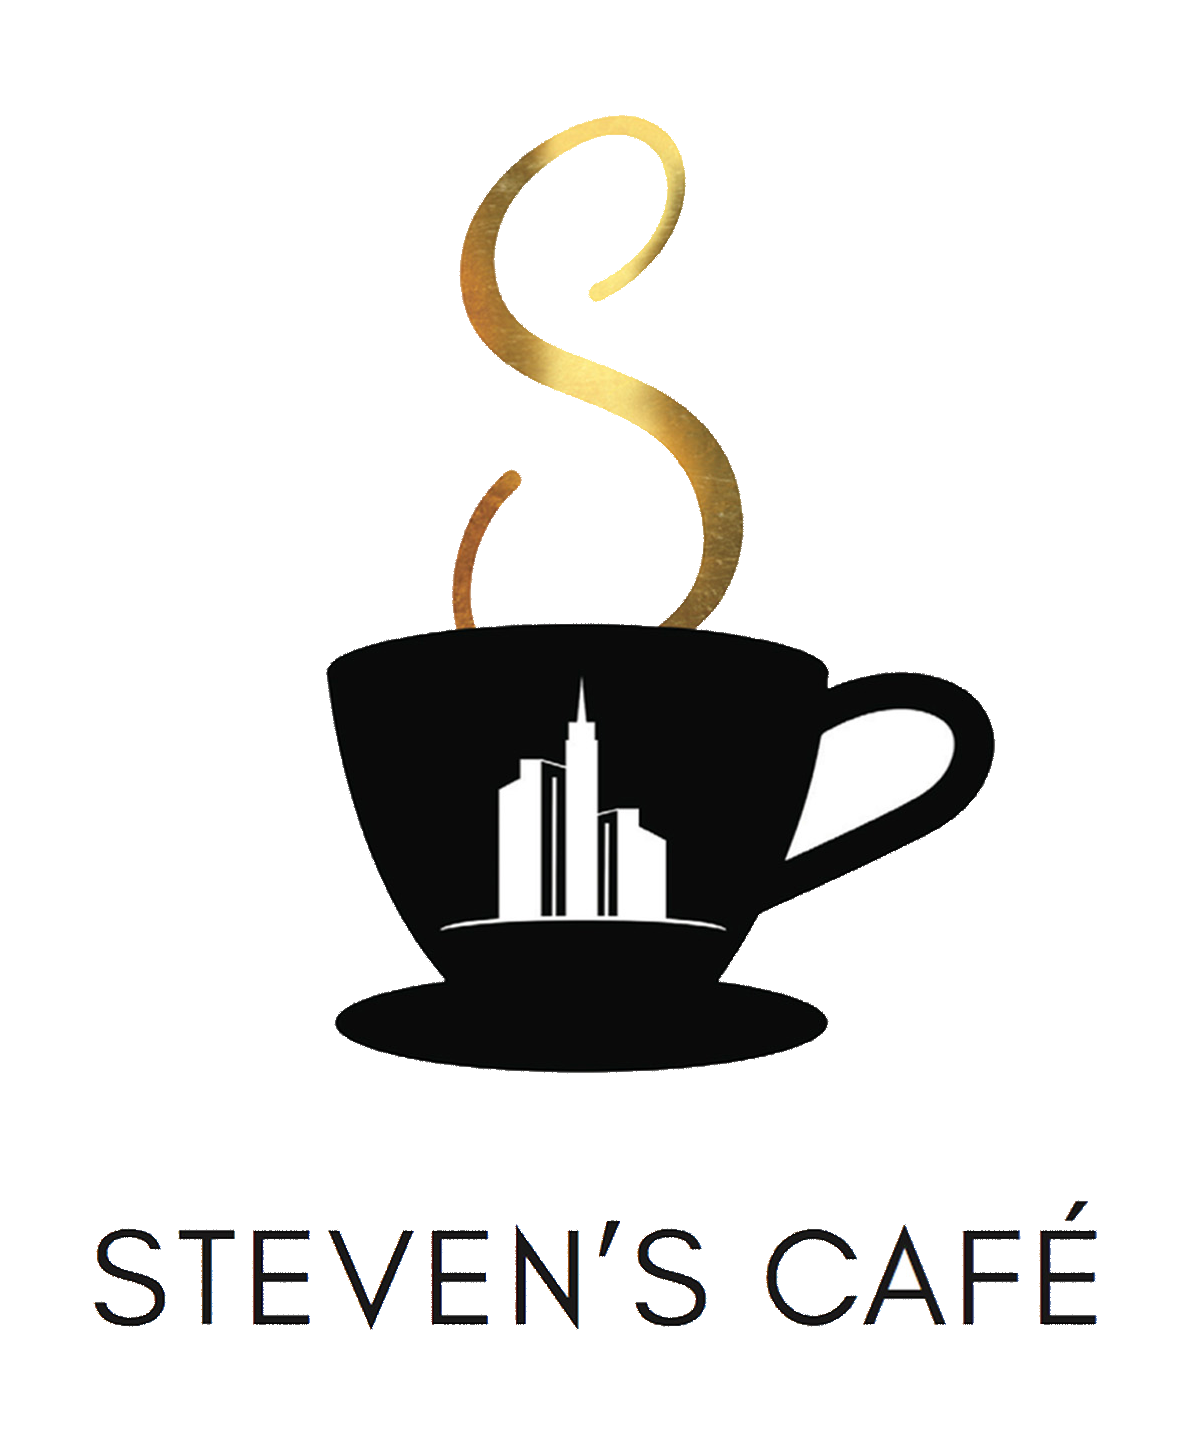 Steven's Cafe 106 Park ave